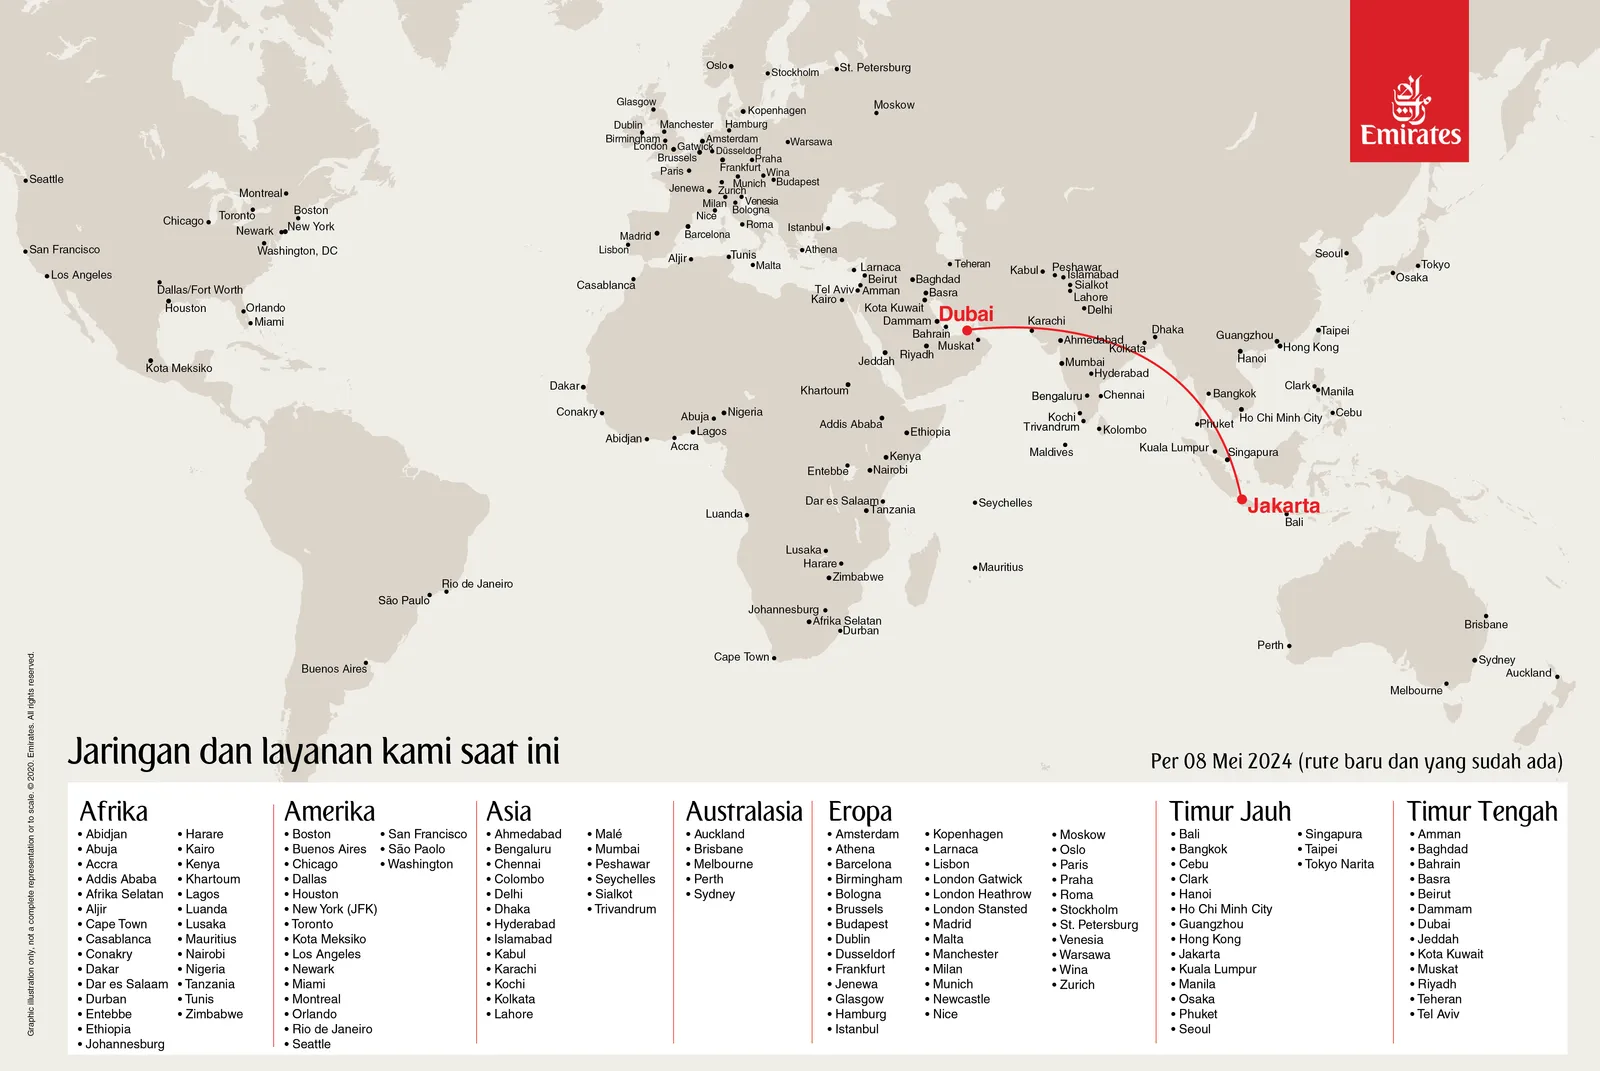 Catat Tanggalnya! Emirates Buka Lowongan Awak Kabin di Jakarta